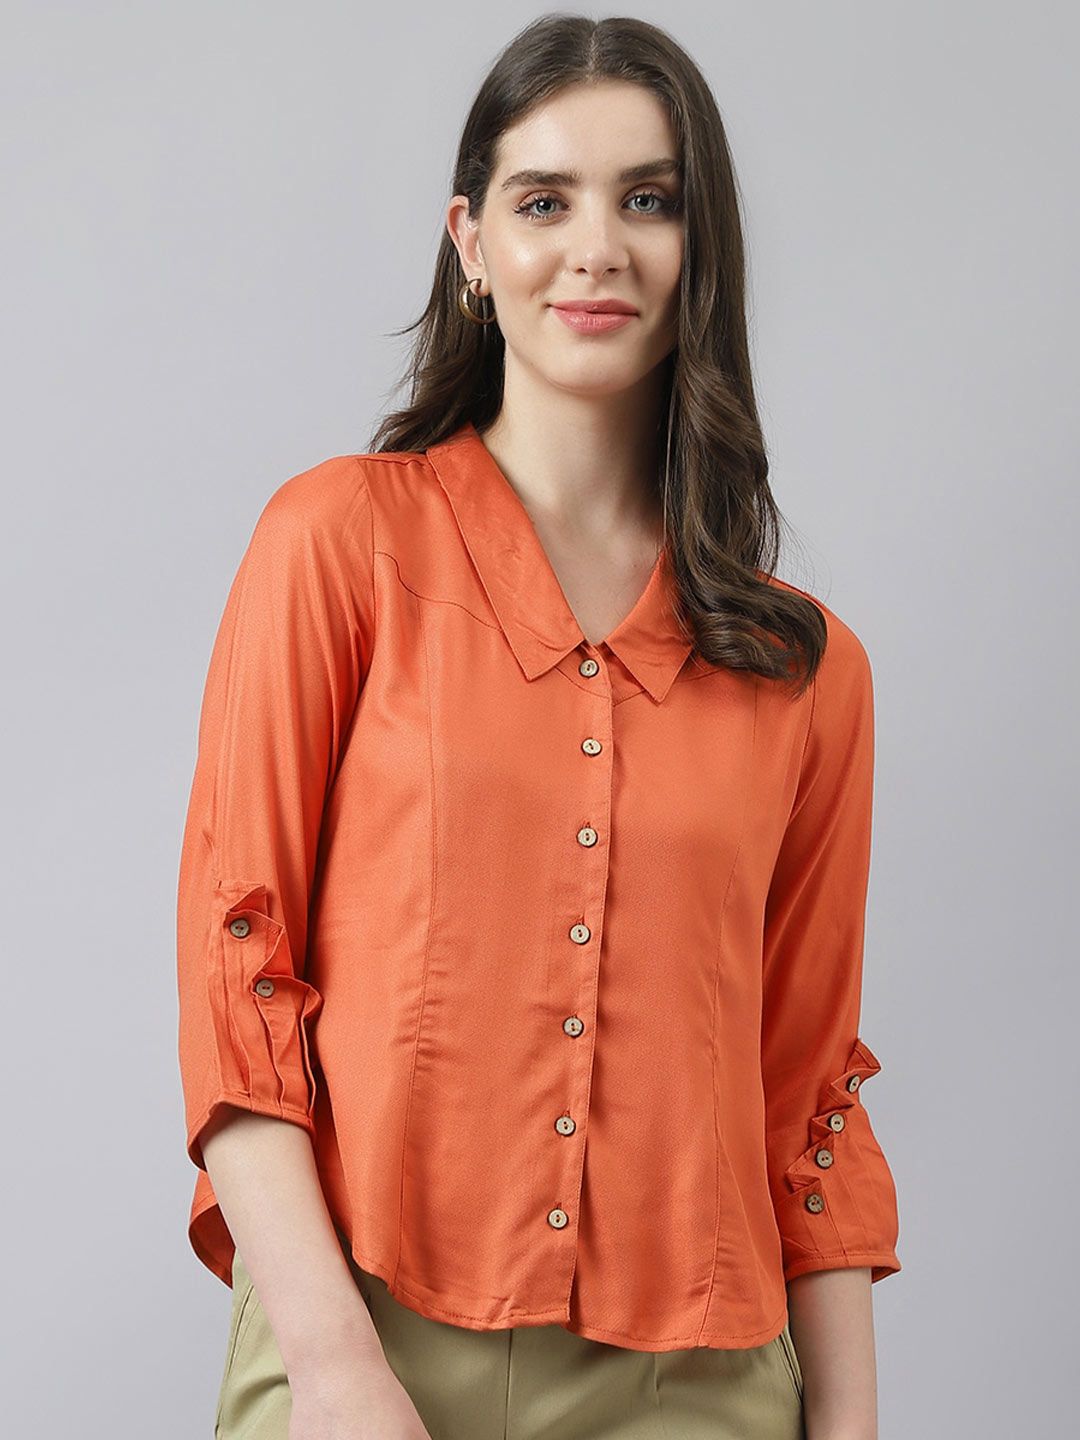 Latin Quarters Orange Shirt Style Top Price in India